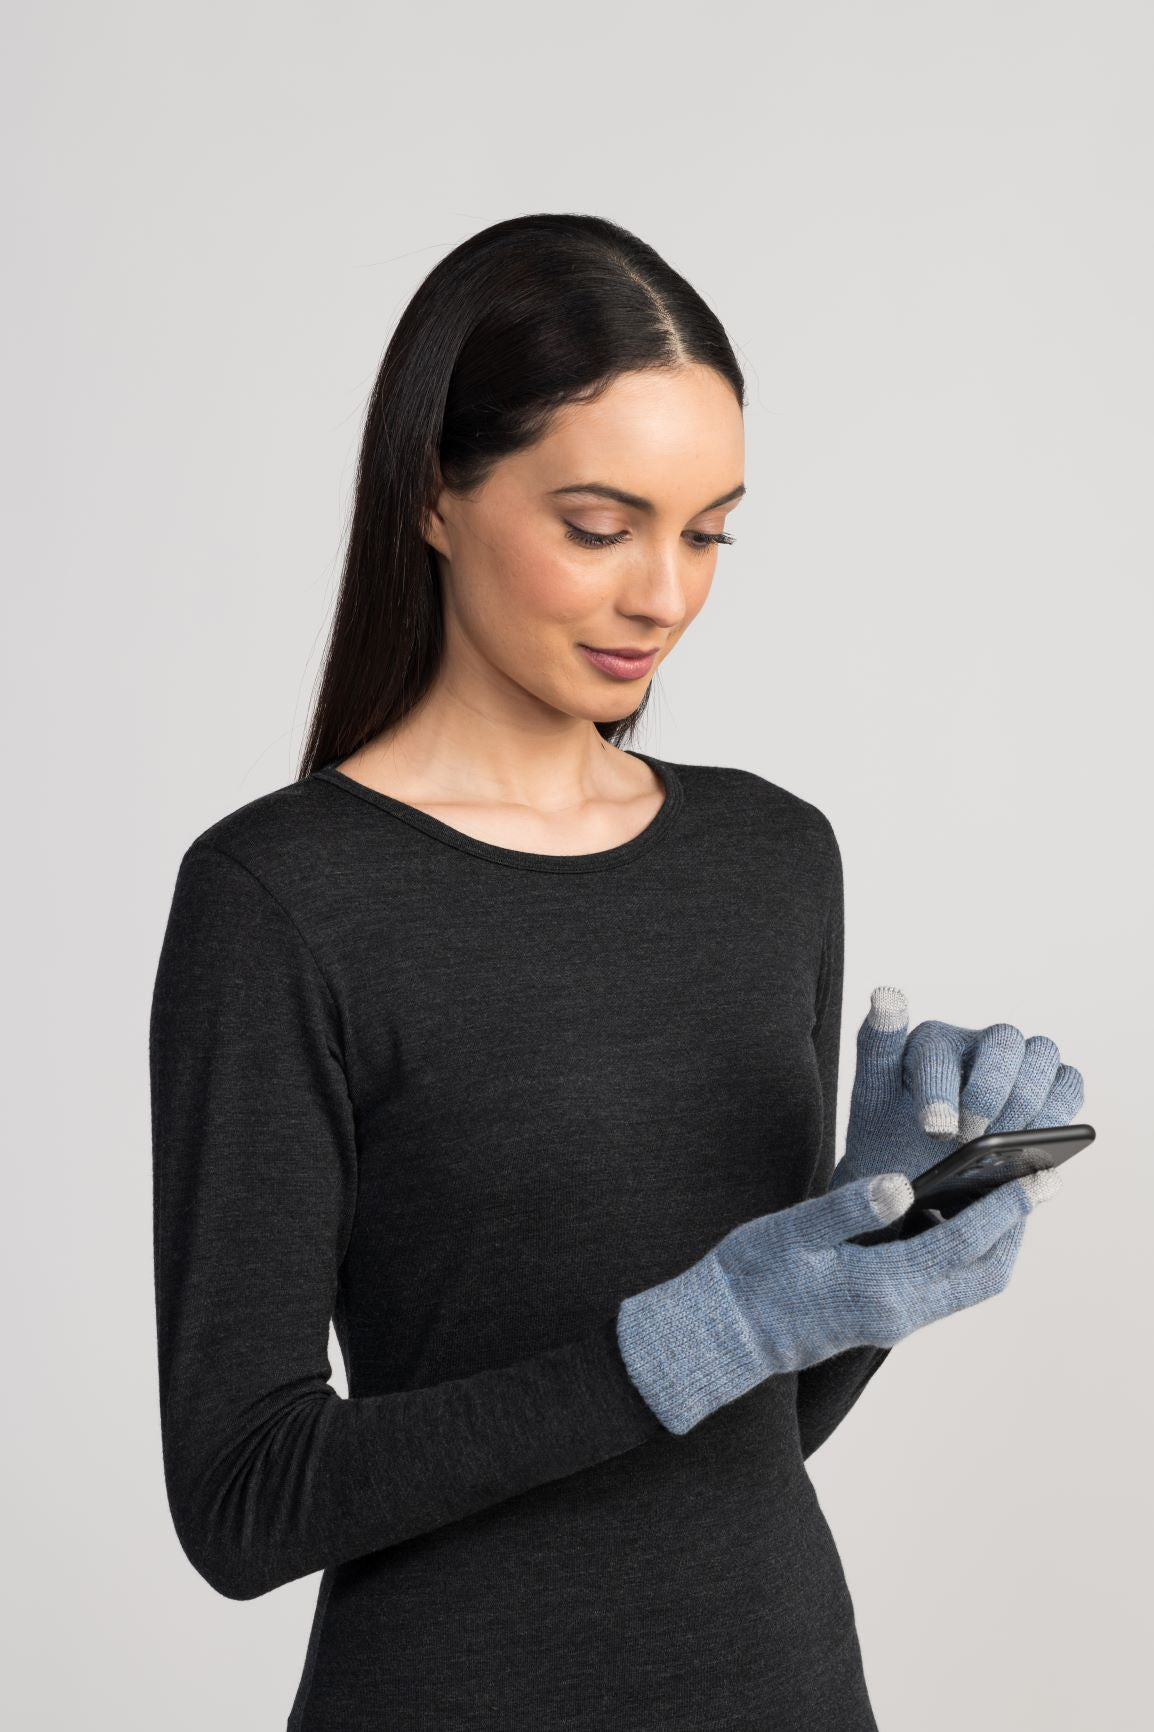 Smart Gloves